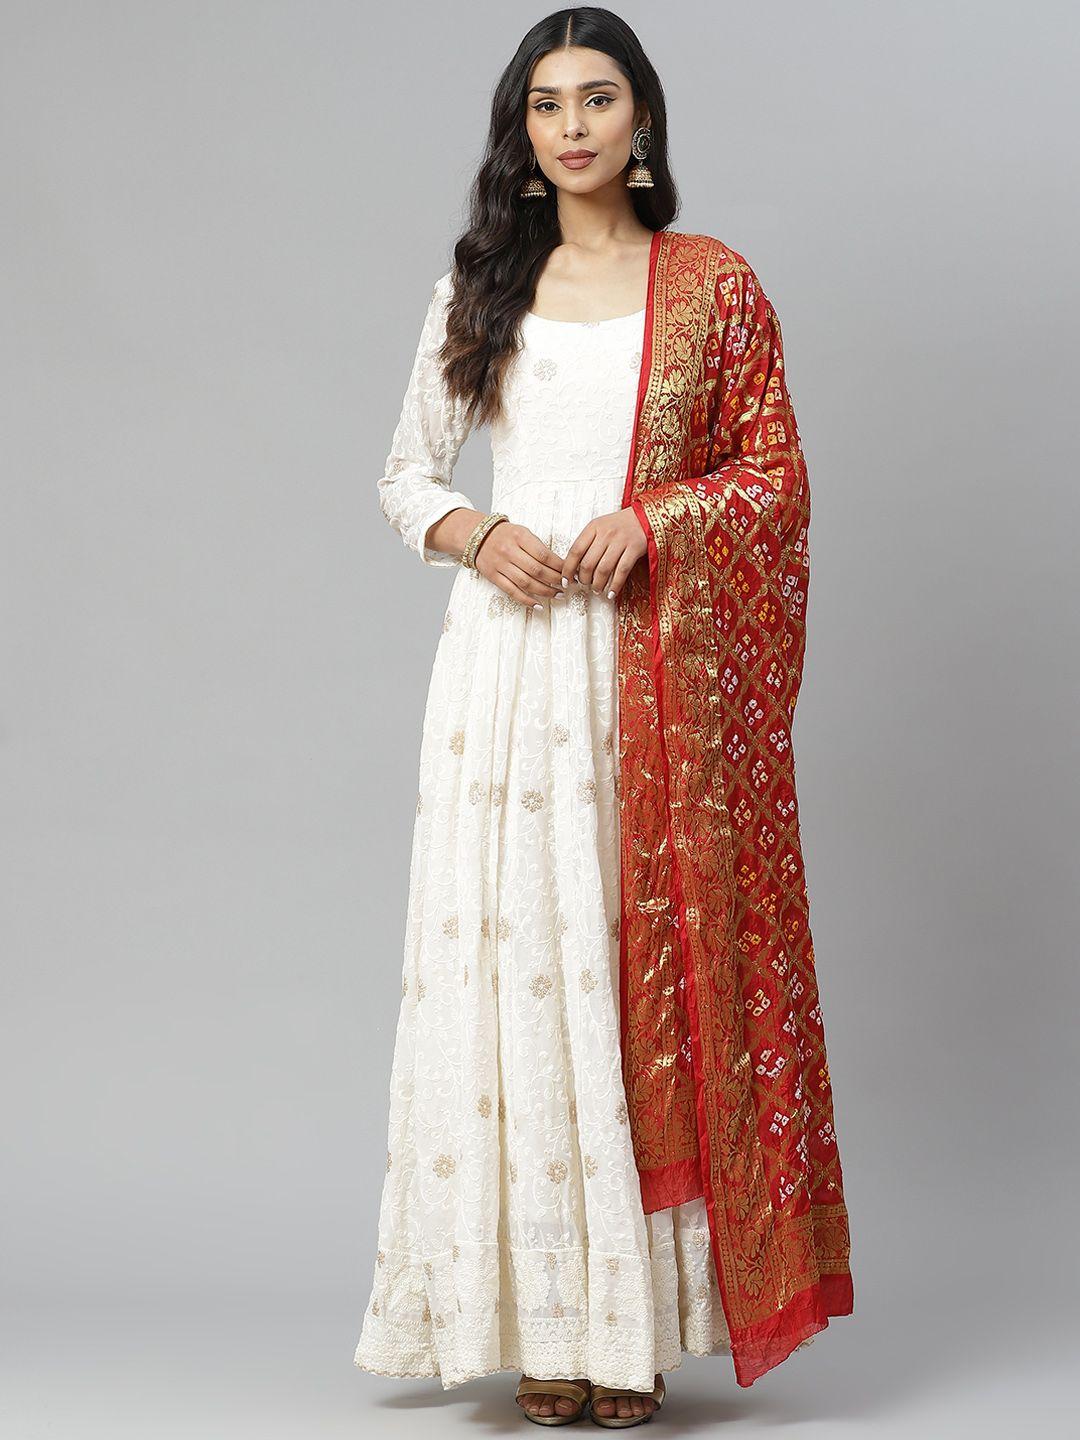 rangpur women off-white & golden chikankari embroidered maxi dress with printed dupatta